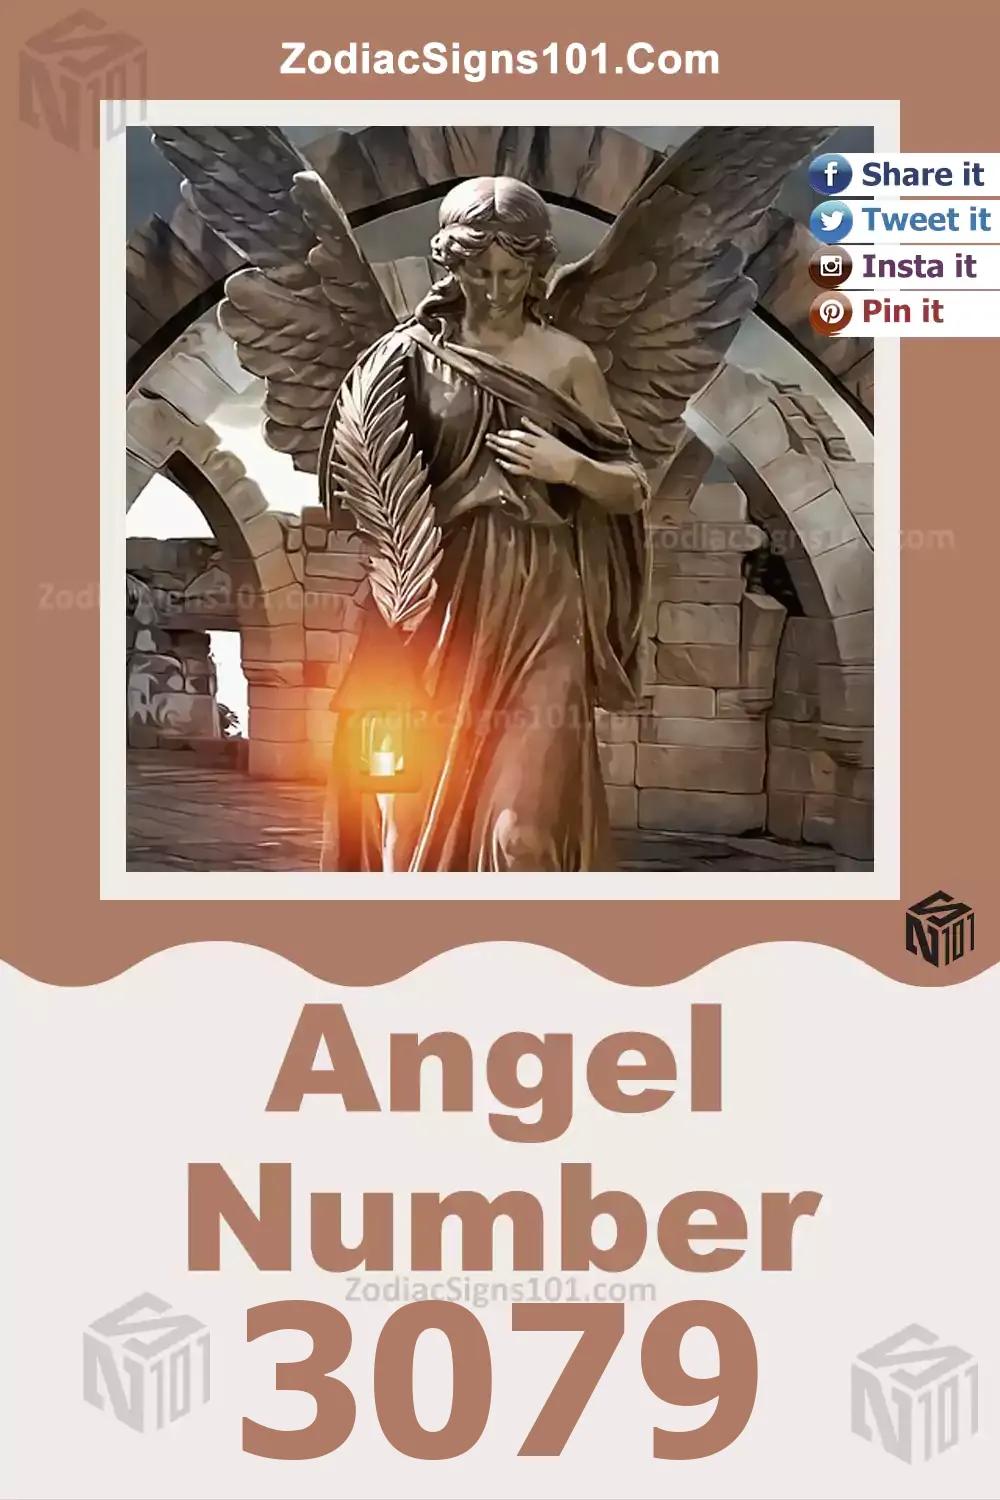 3079-Angel-Number-Meaning.jpg